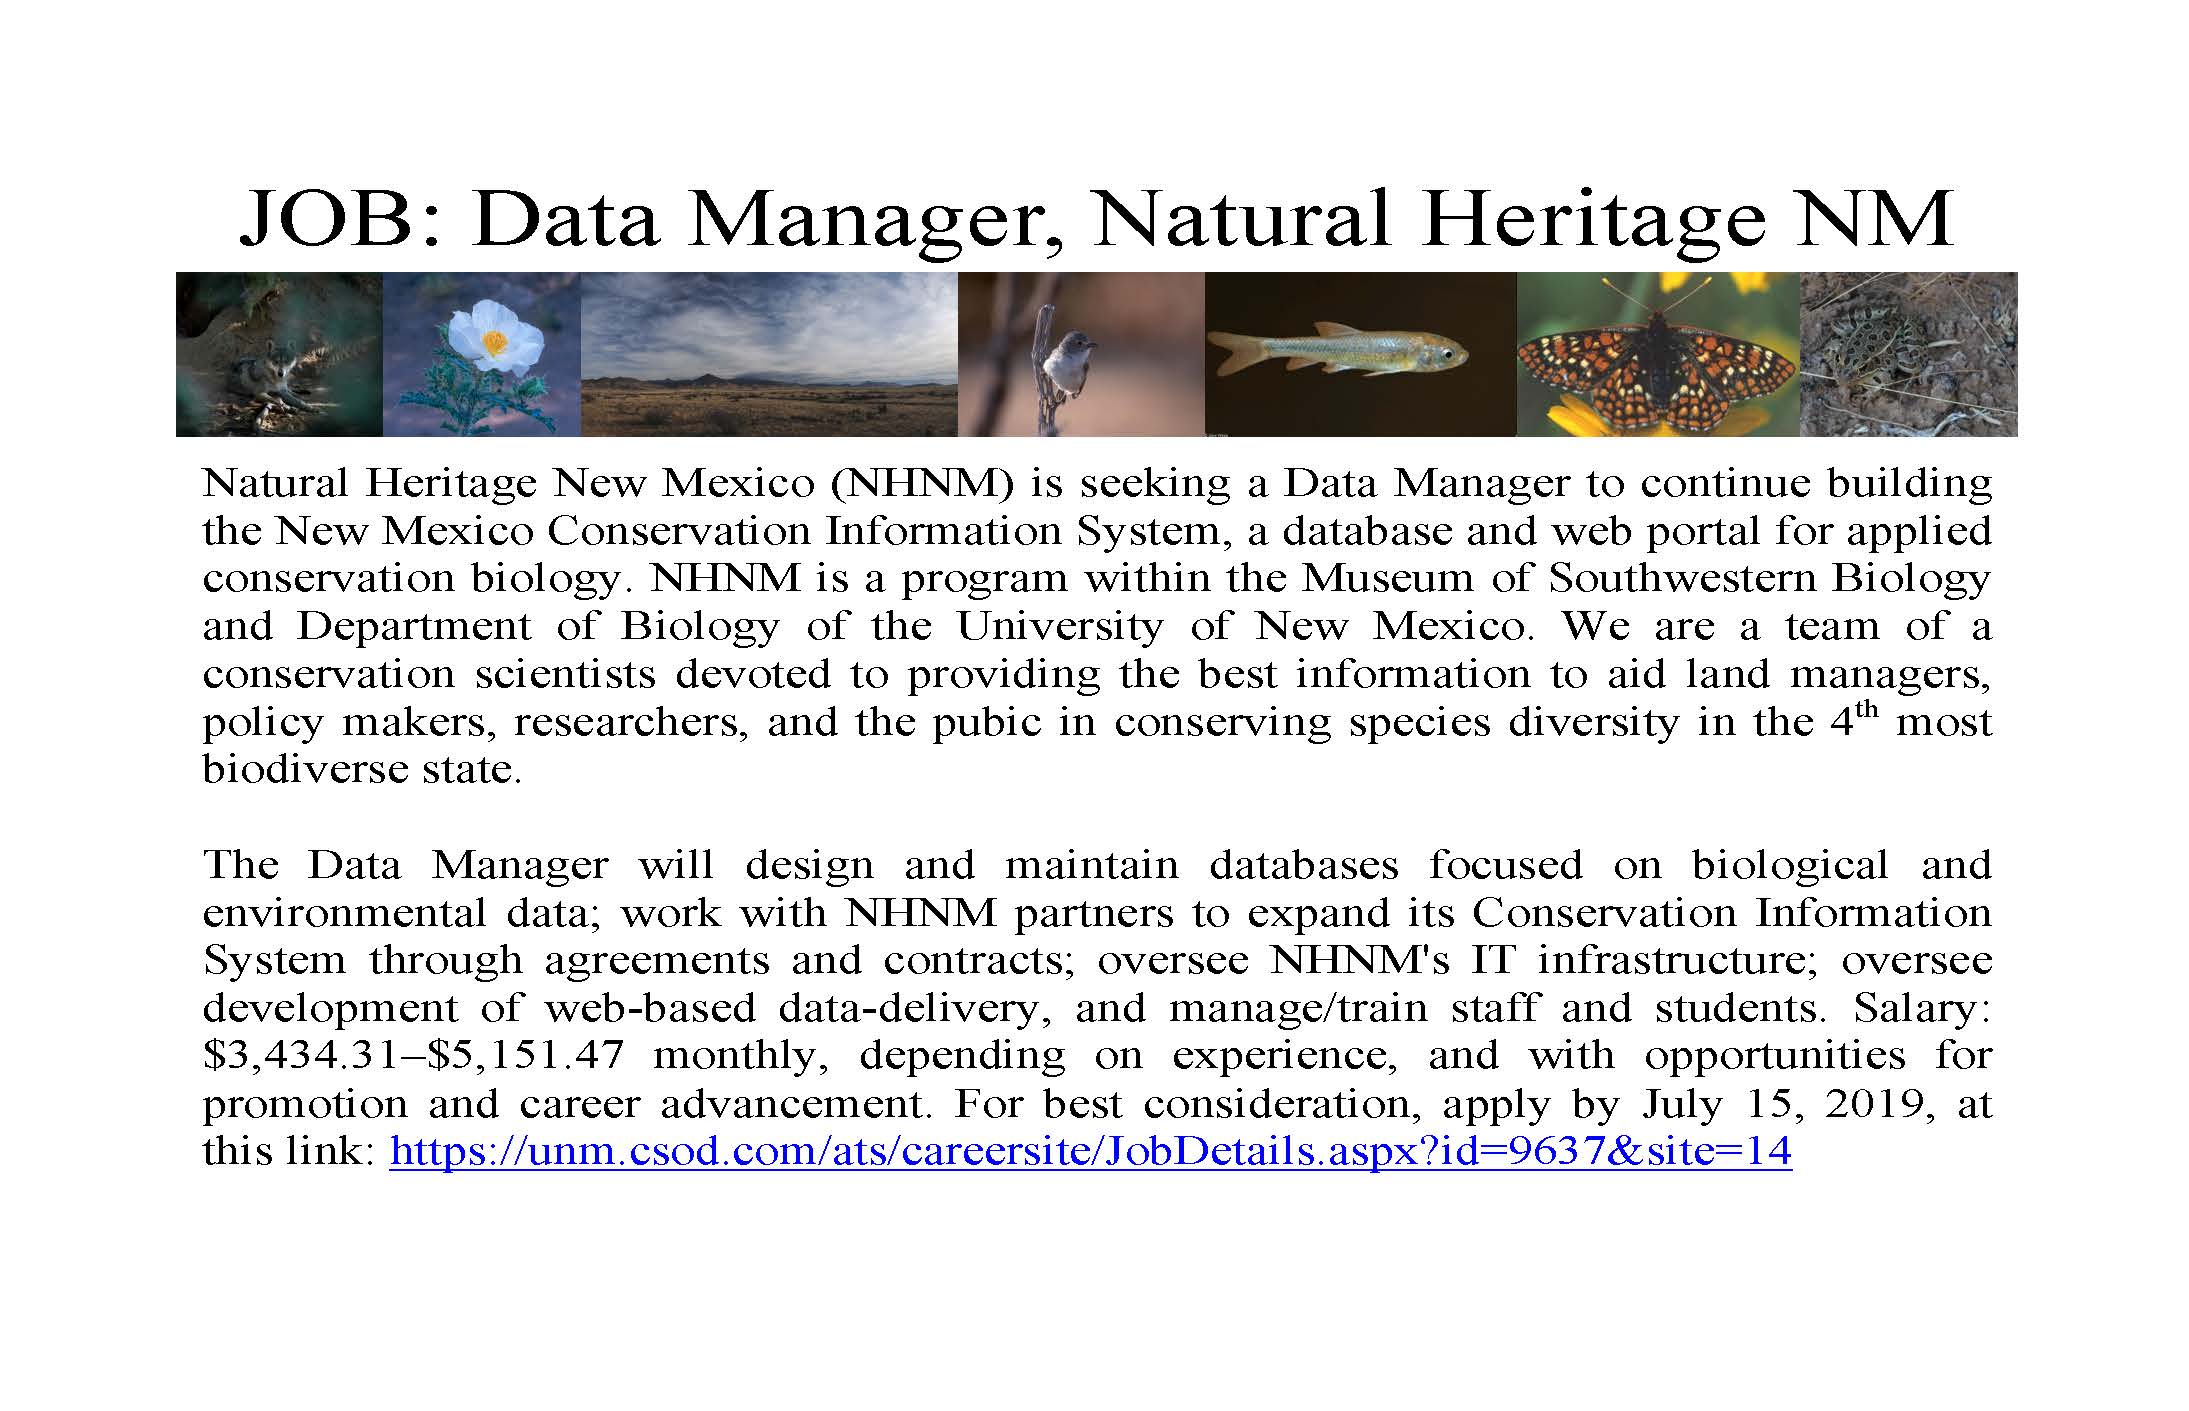 Job description for Natural History, Data Manager